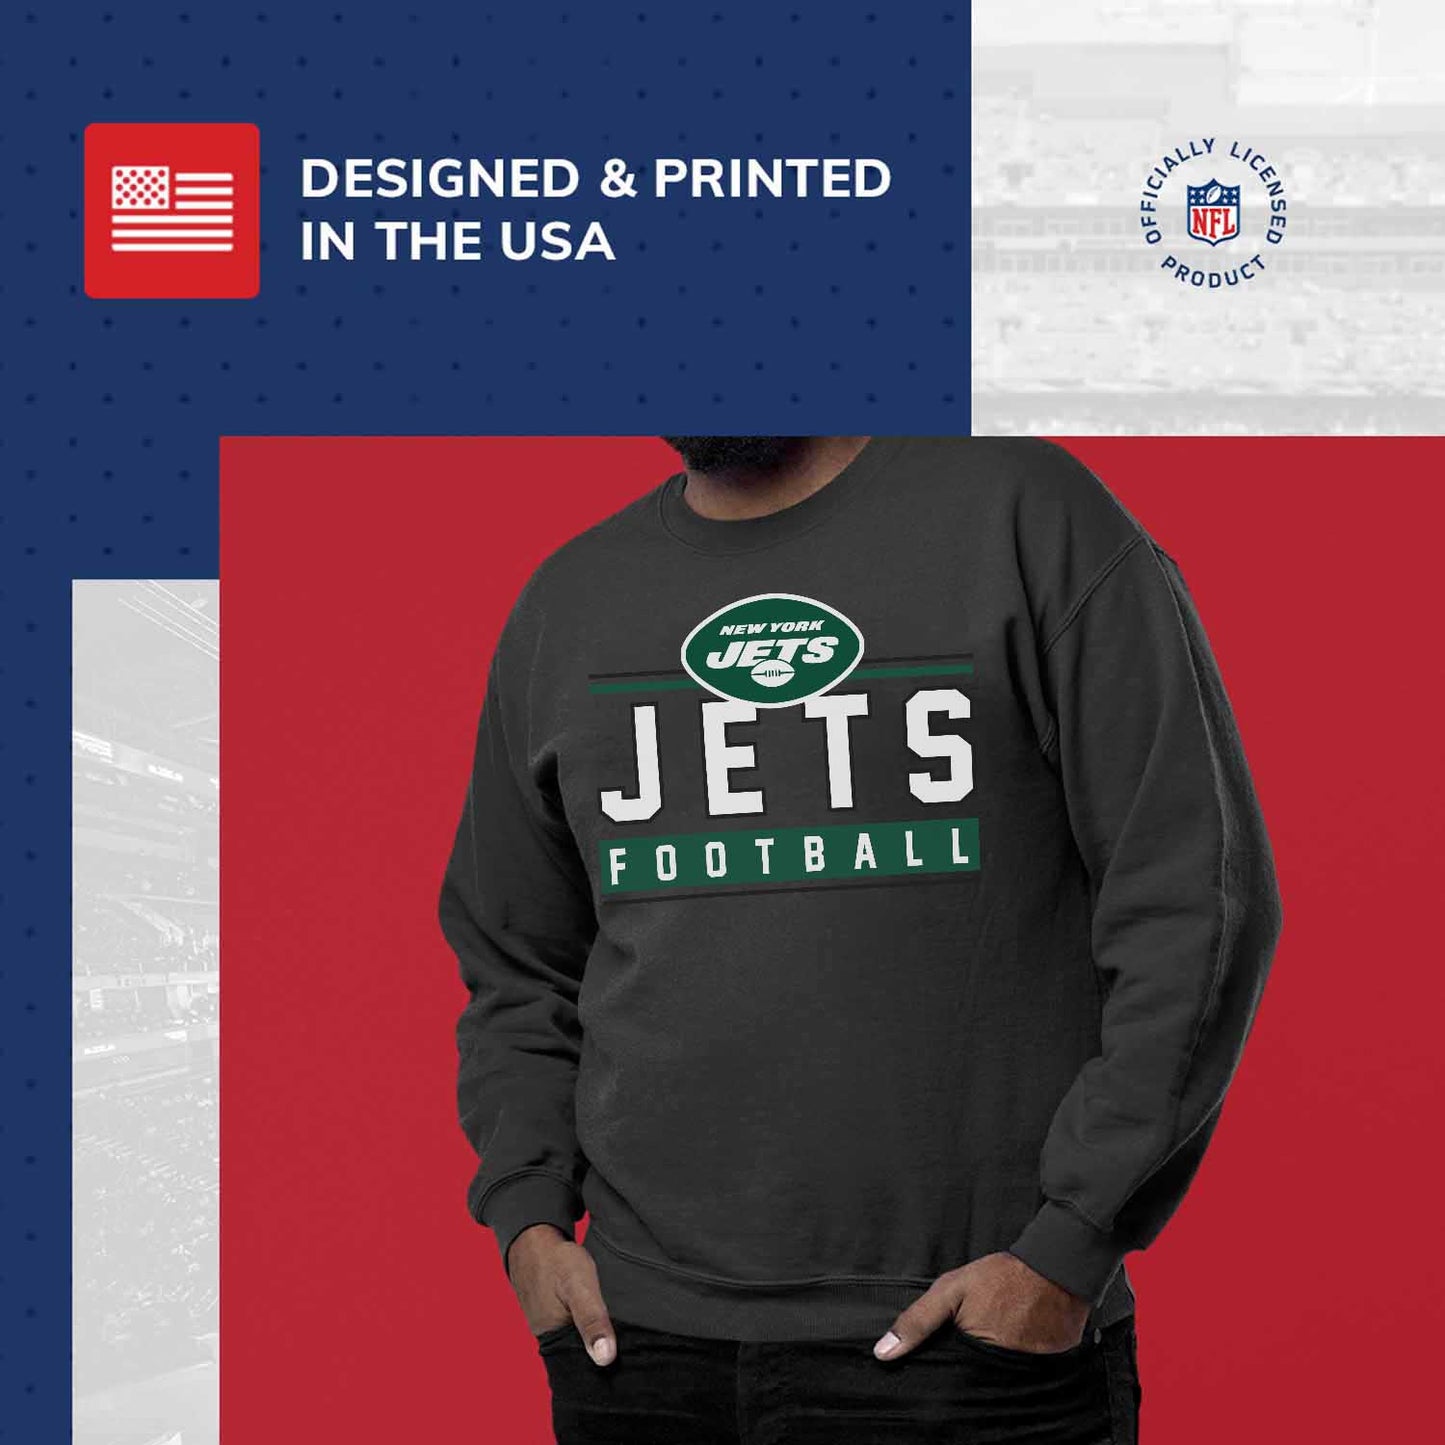 New York Jets NFL Adult True Fan Crewneck Sweatshirt - Charcoal